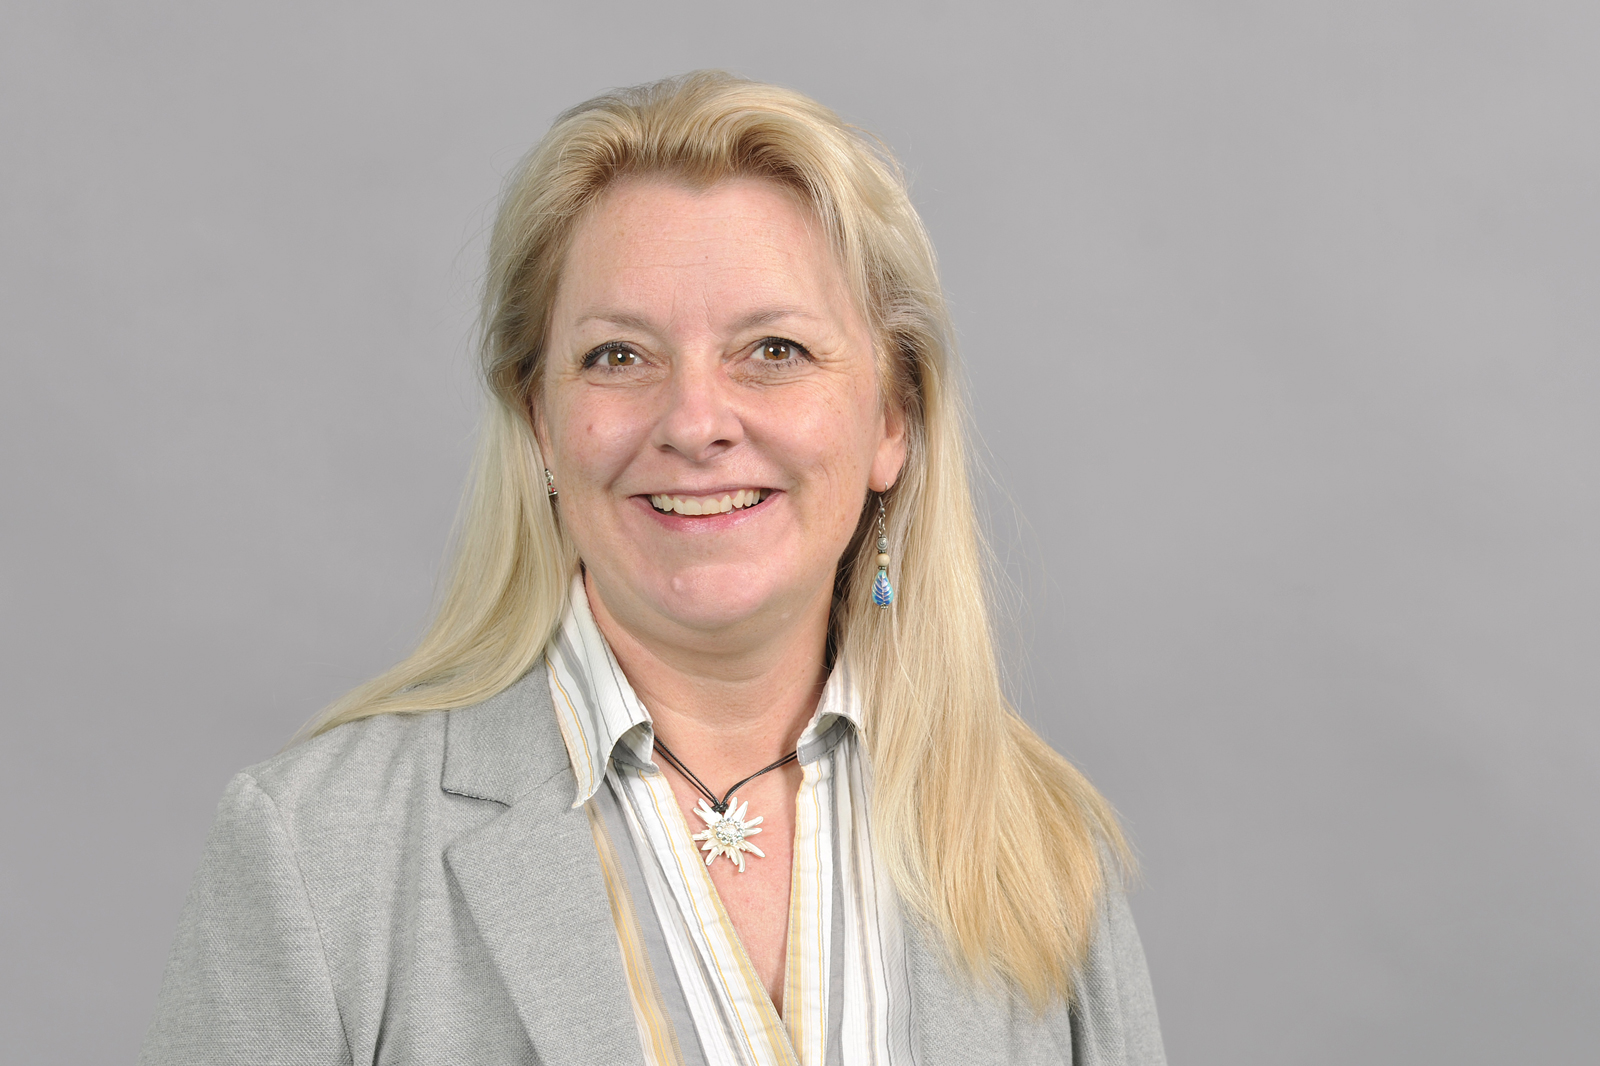 Sonja Letzner | Safety Expert International Projects @ RWE Technology GmbH